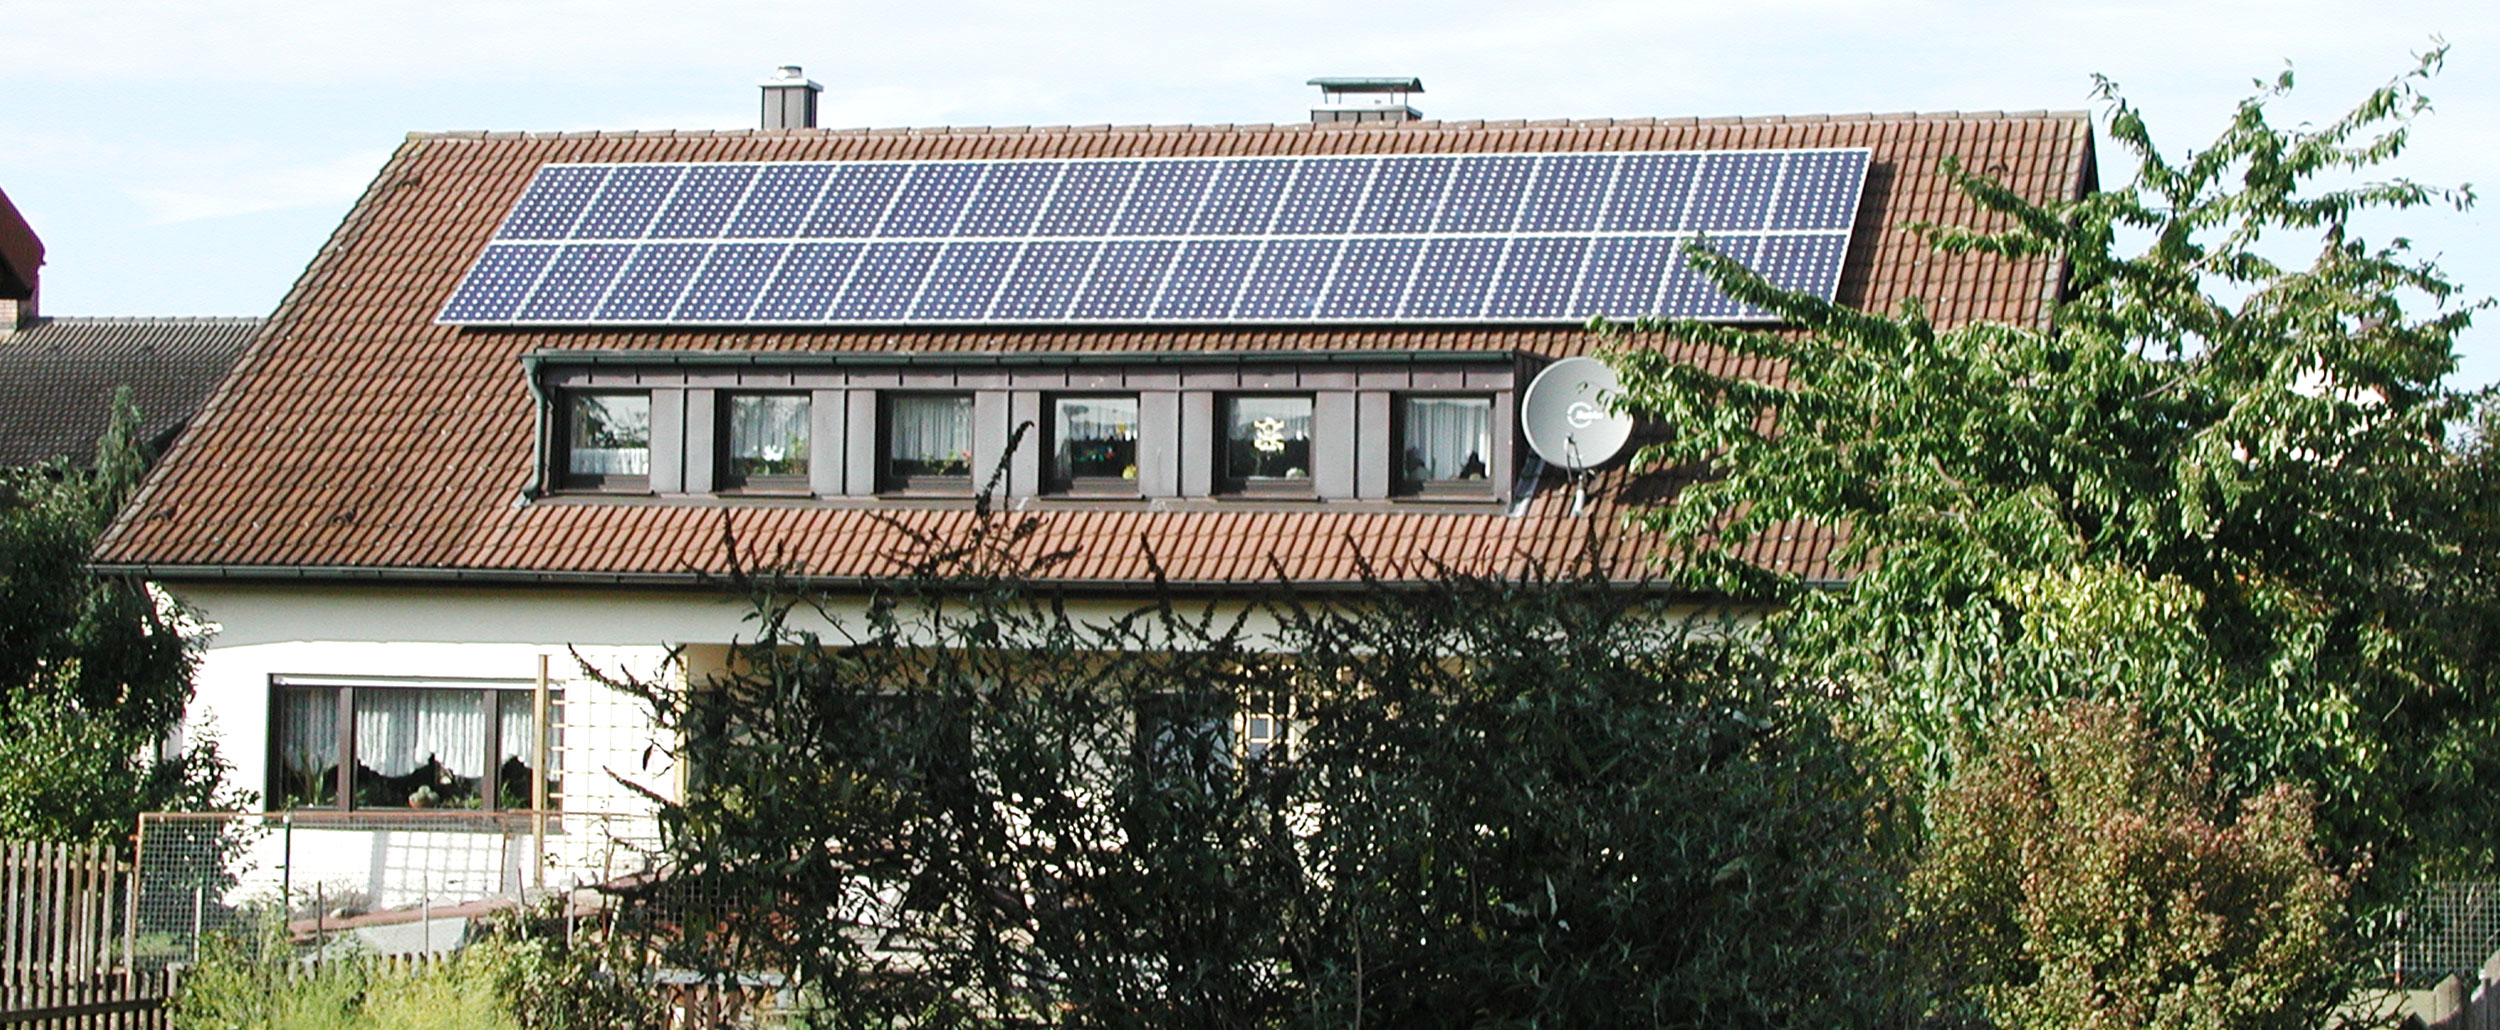 Privathaus mit Photovoltaikanlage